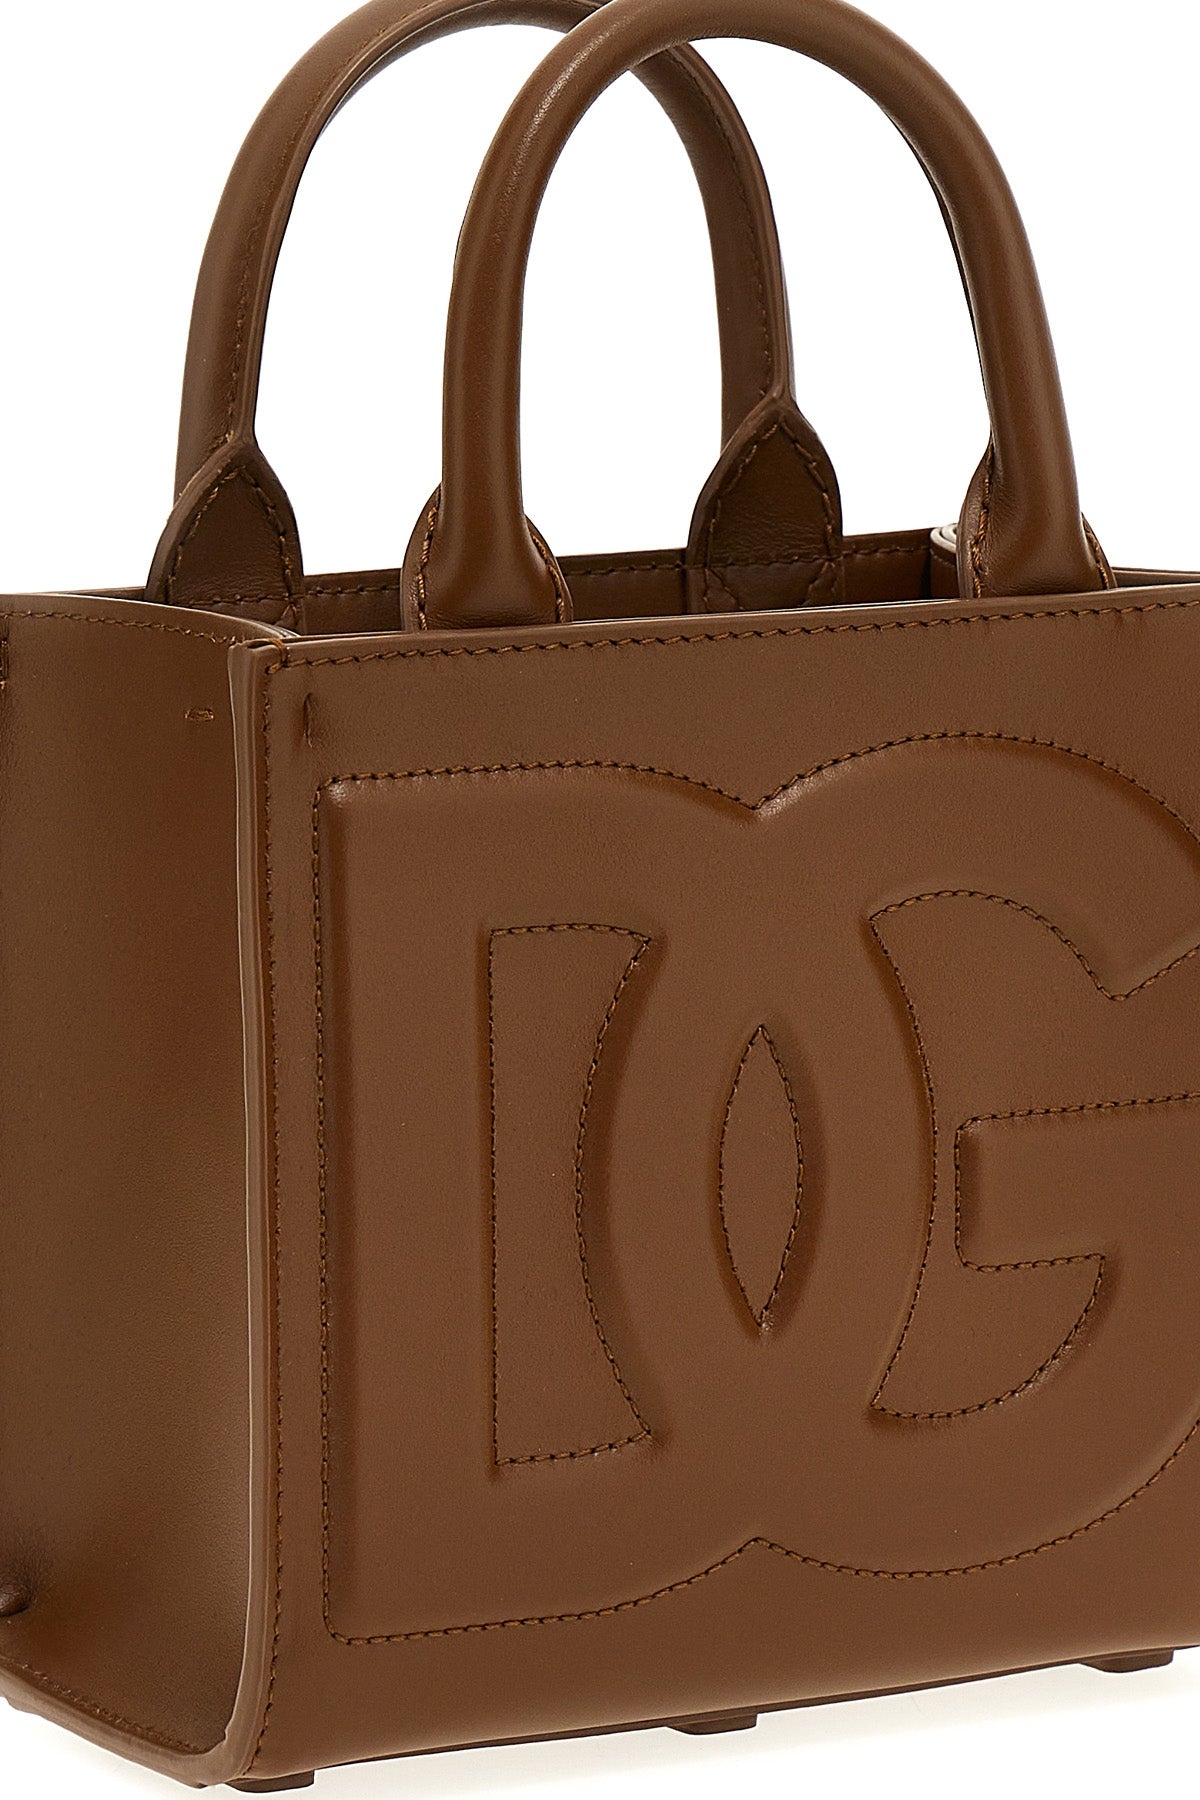 Dolce & Gabbana 'DG DAILY' SHOPPING BAG BB7479AW57687679